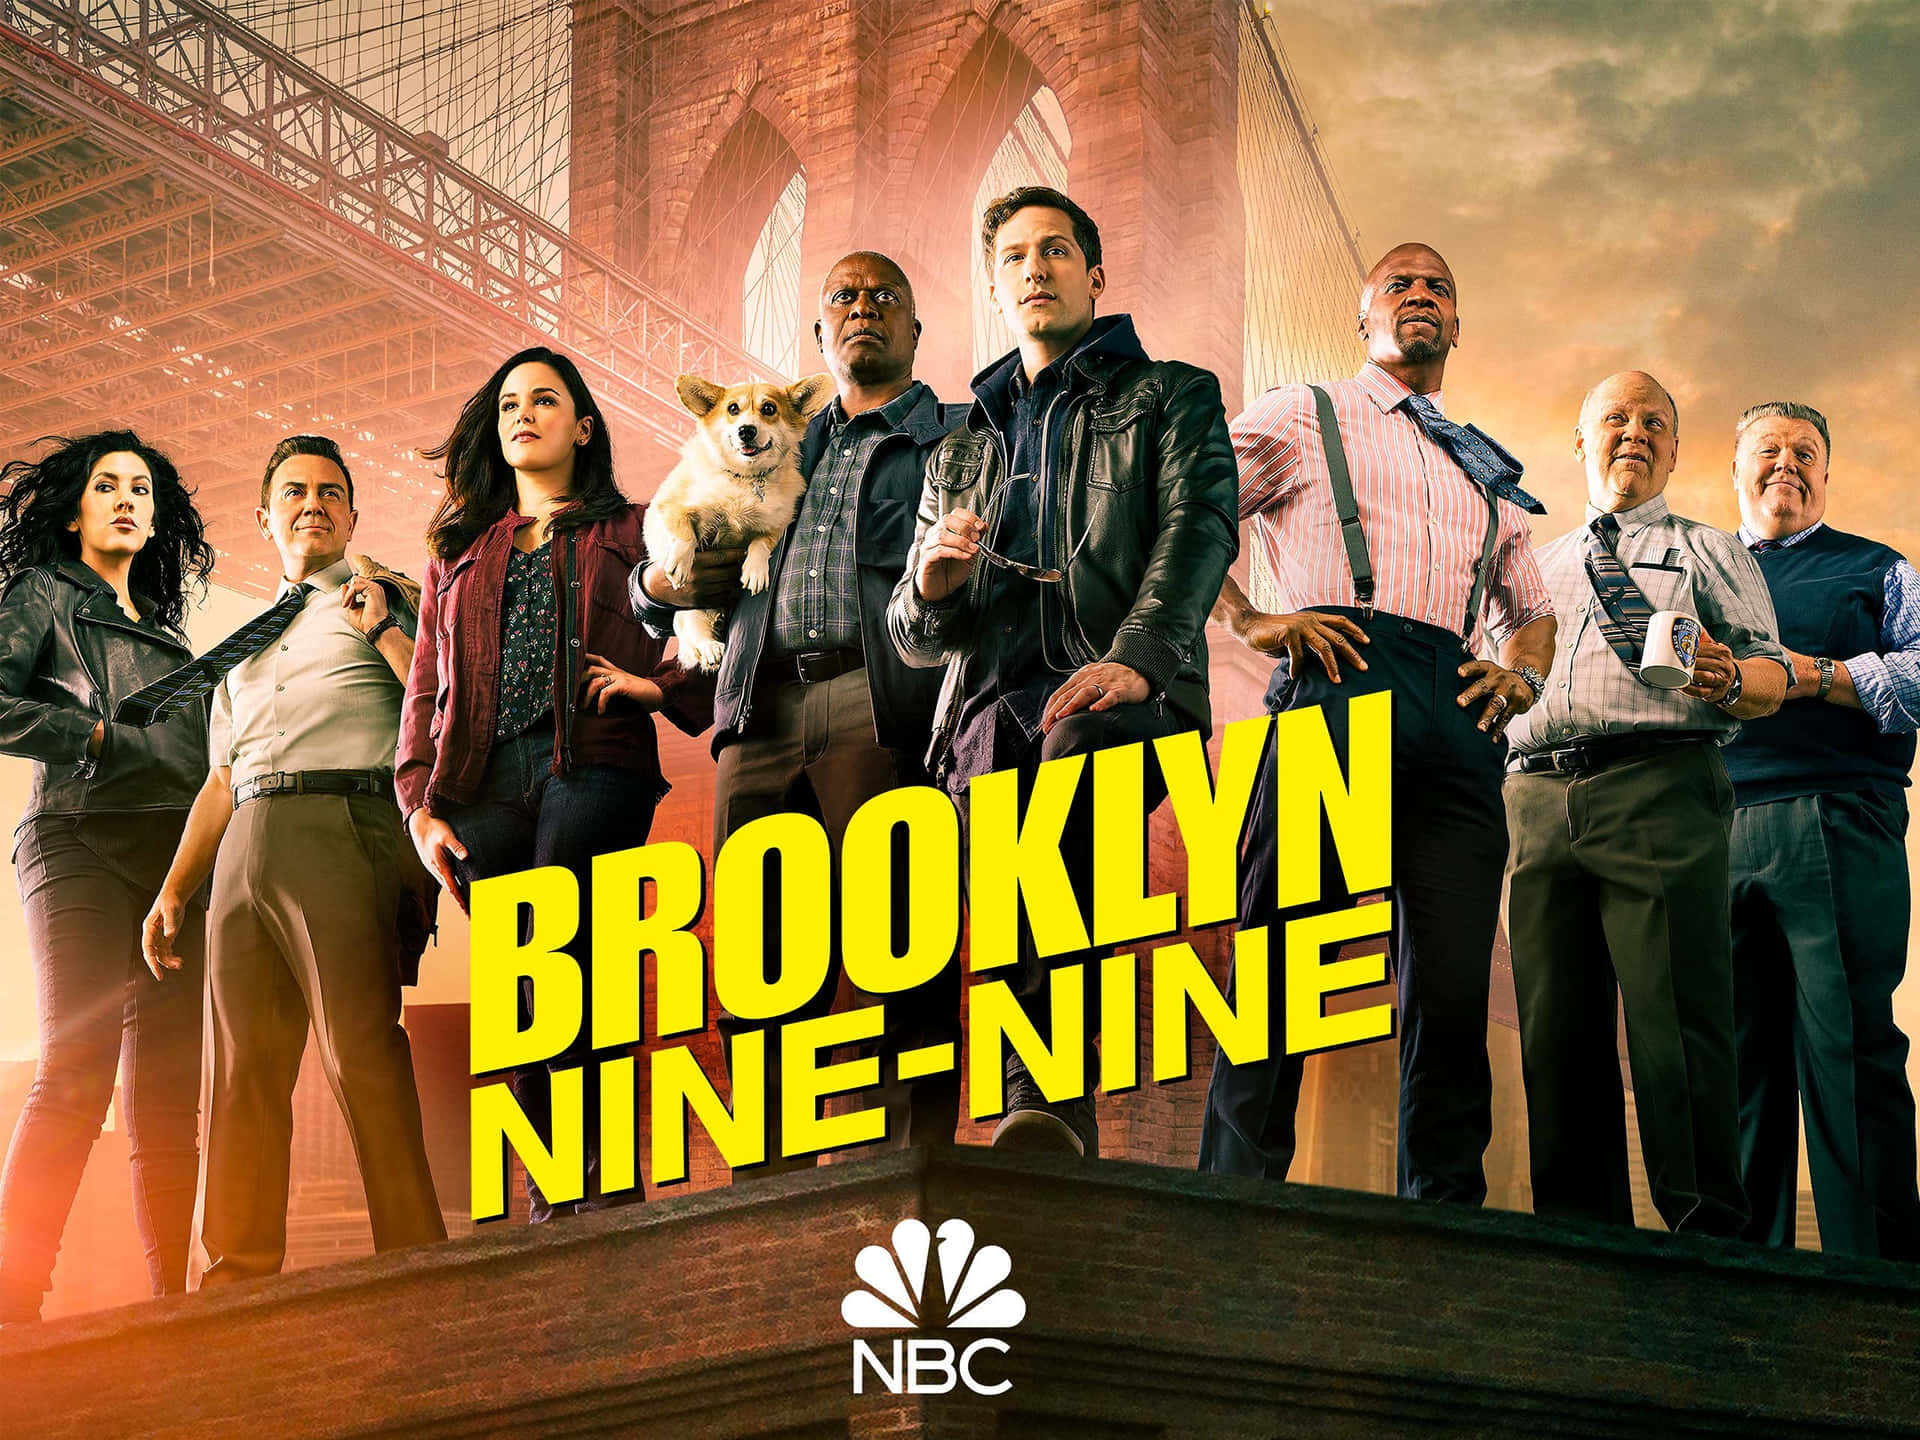 Enjoy the humor and quirkiness of NBC's Brooklyn Nine Nine!